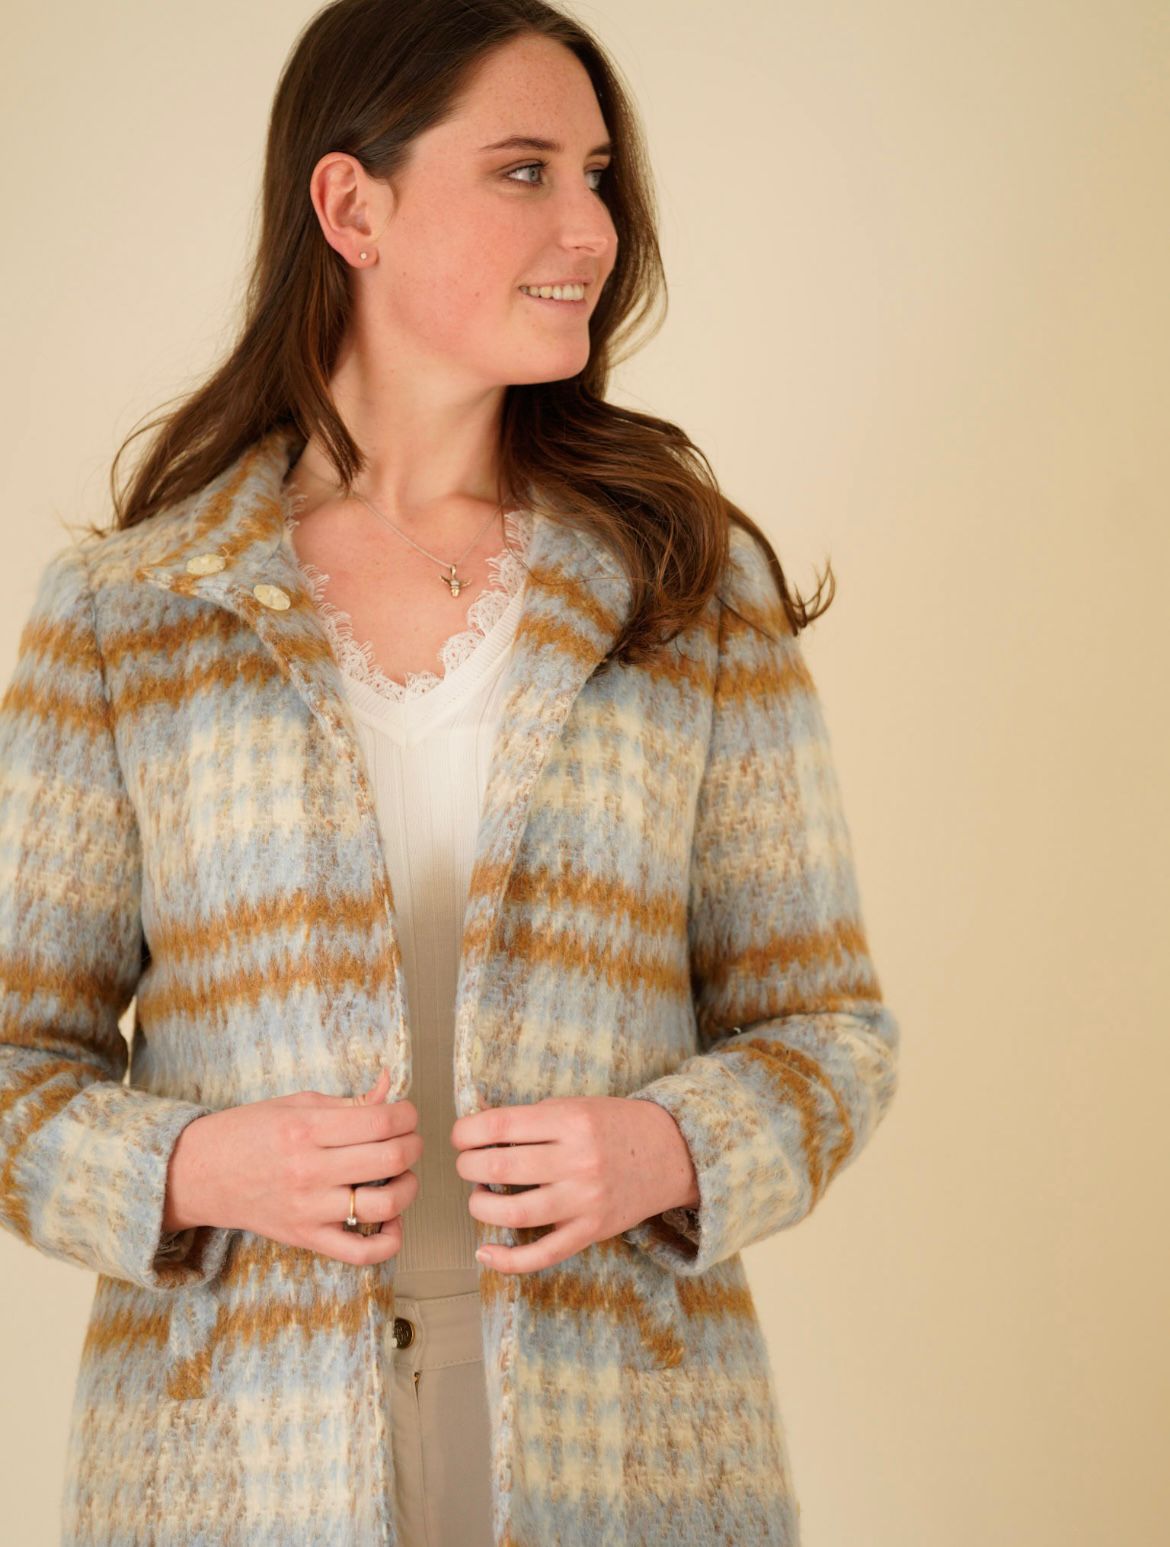 Madeleine wool mid length coat size GB 12